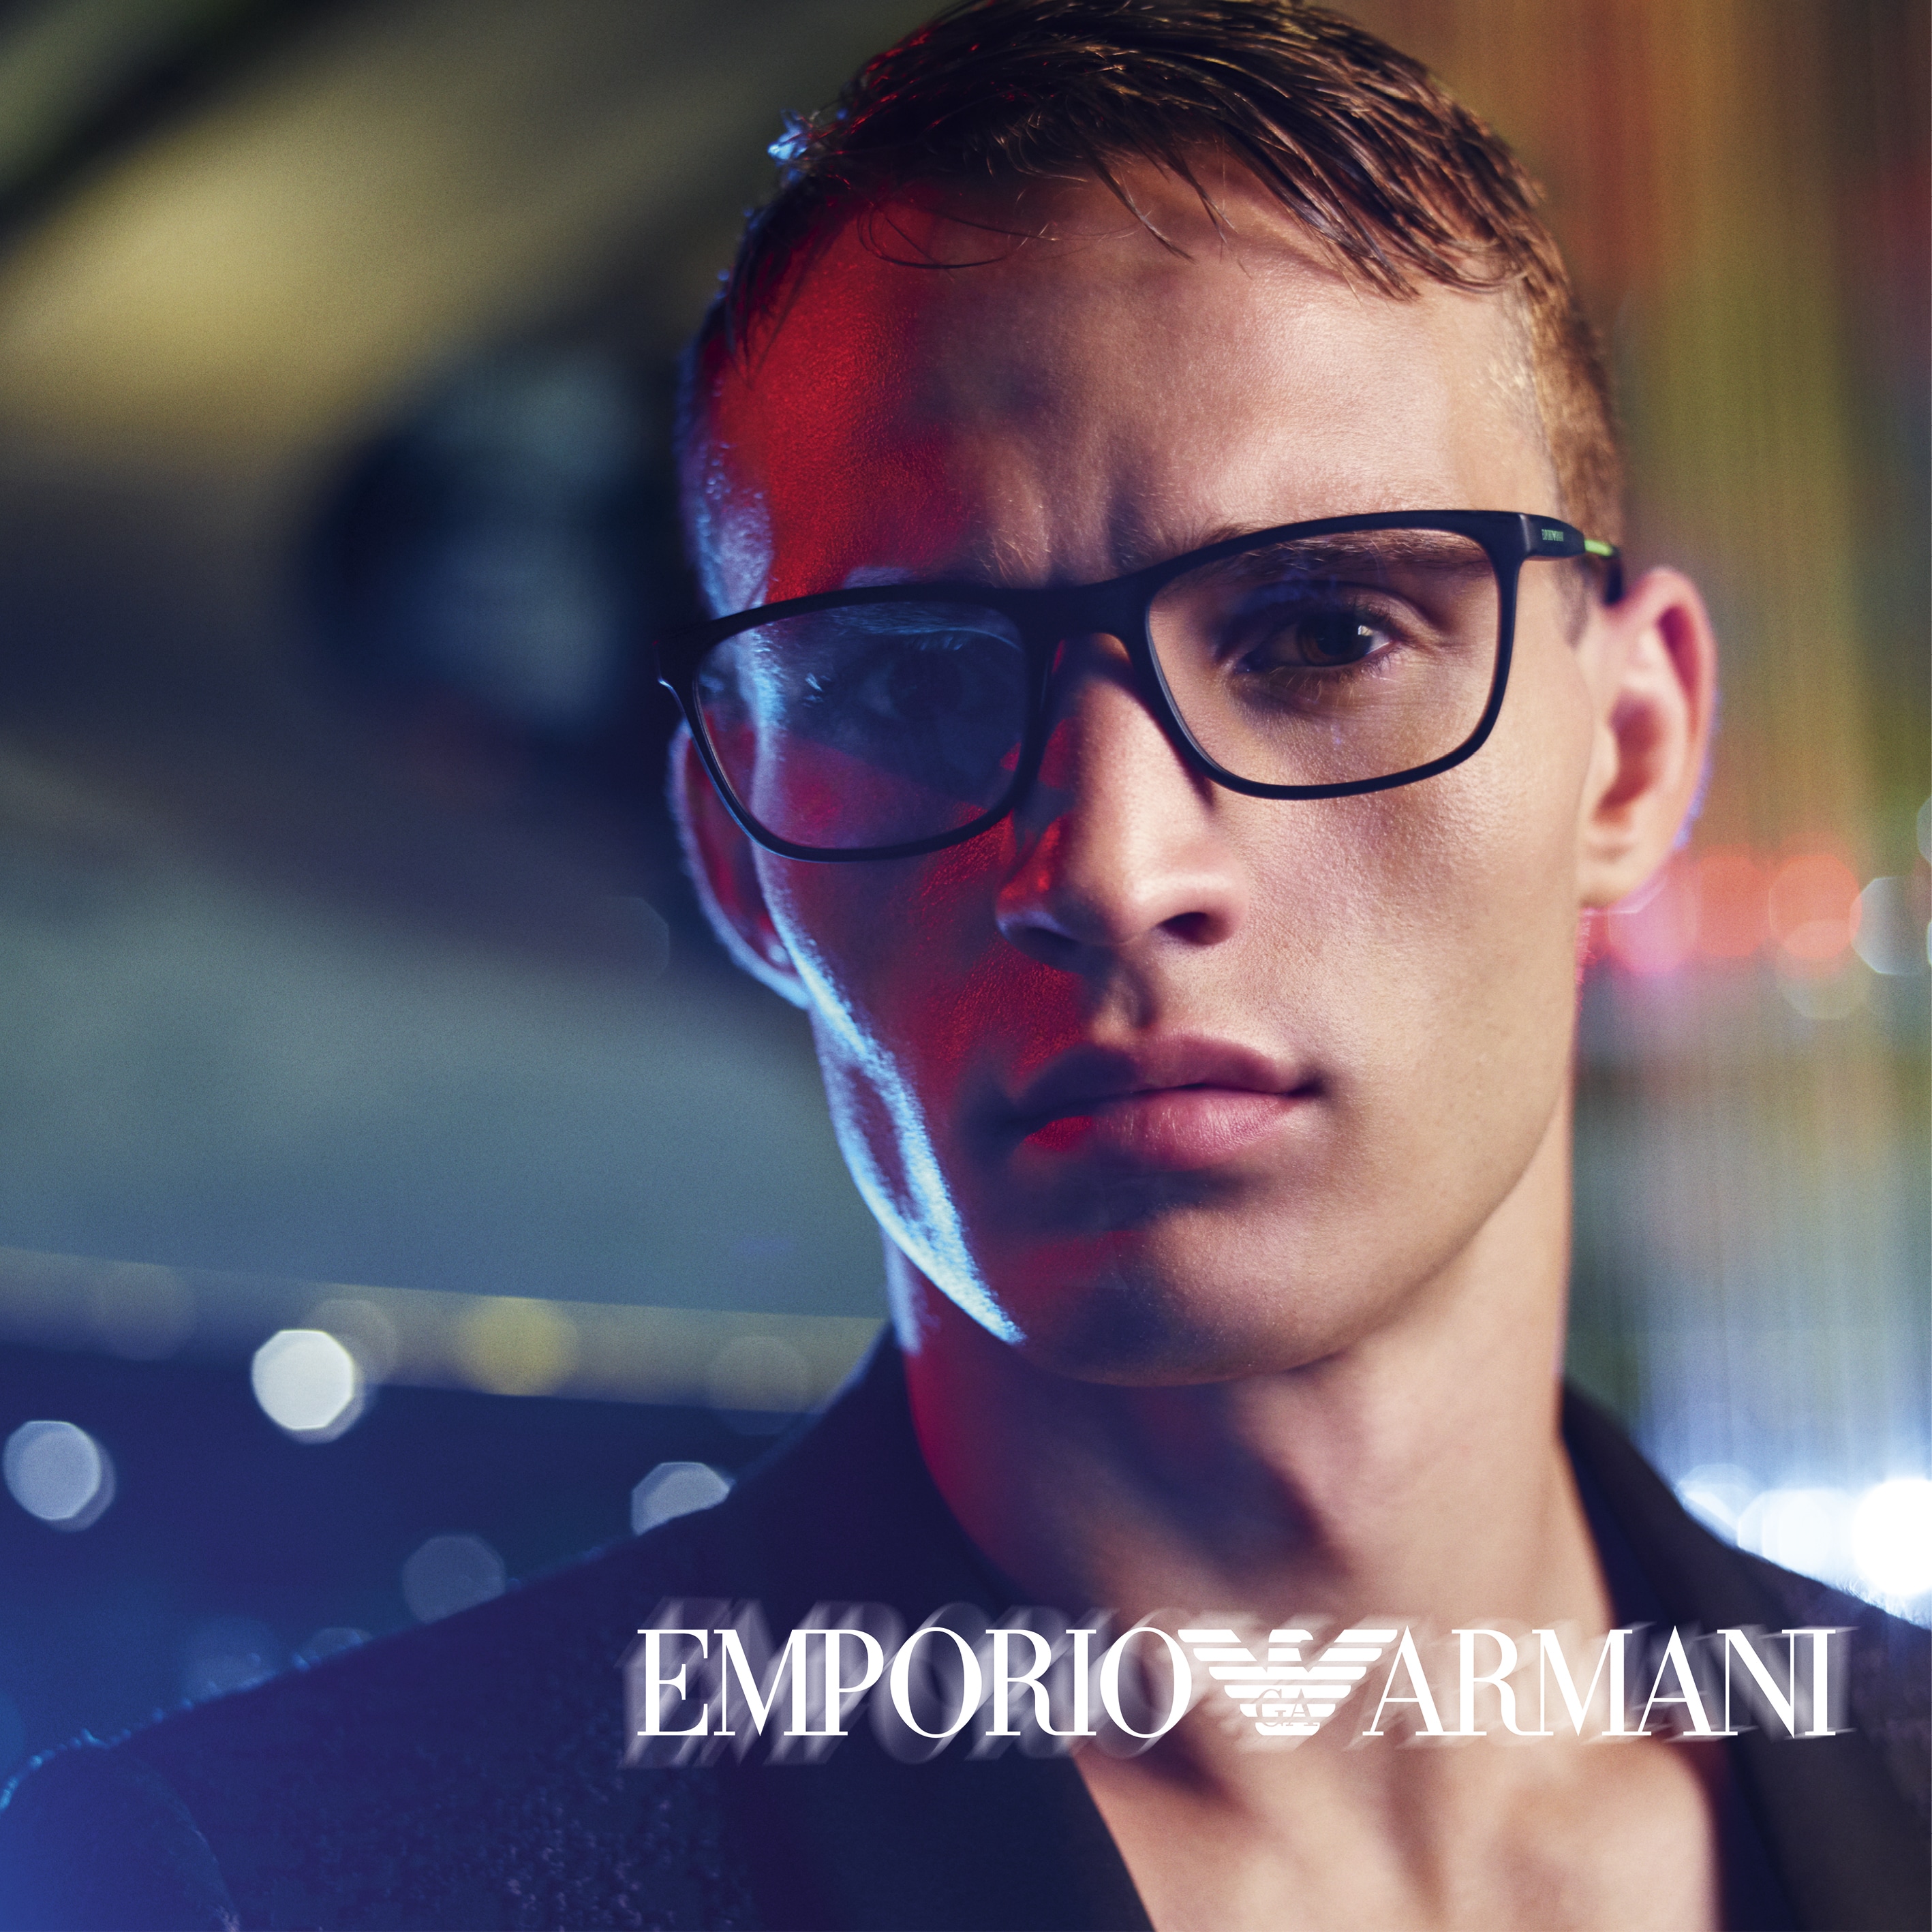 Emporio Armani Eyewear | Grace & Vision Optometrist